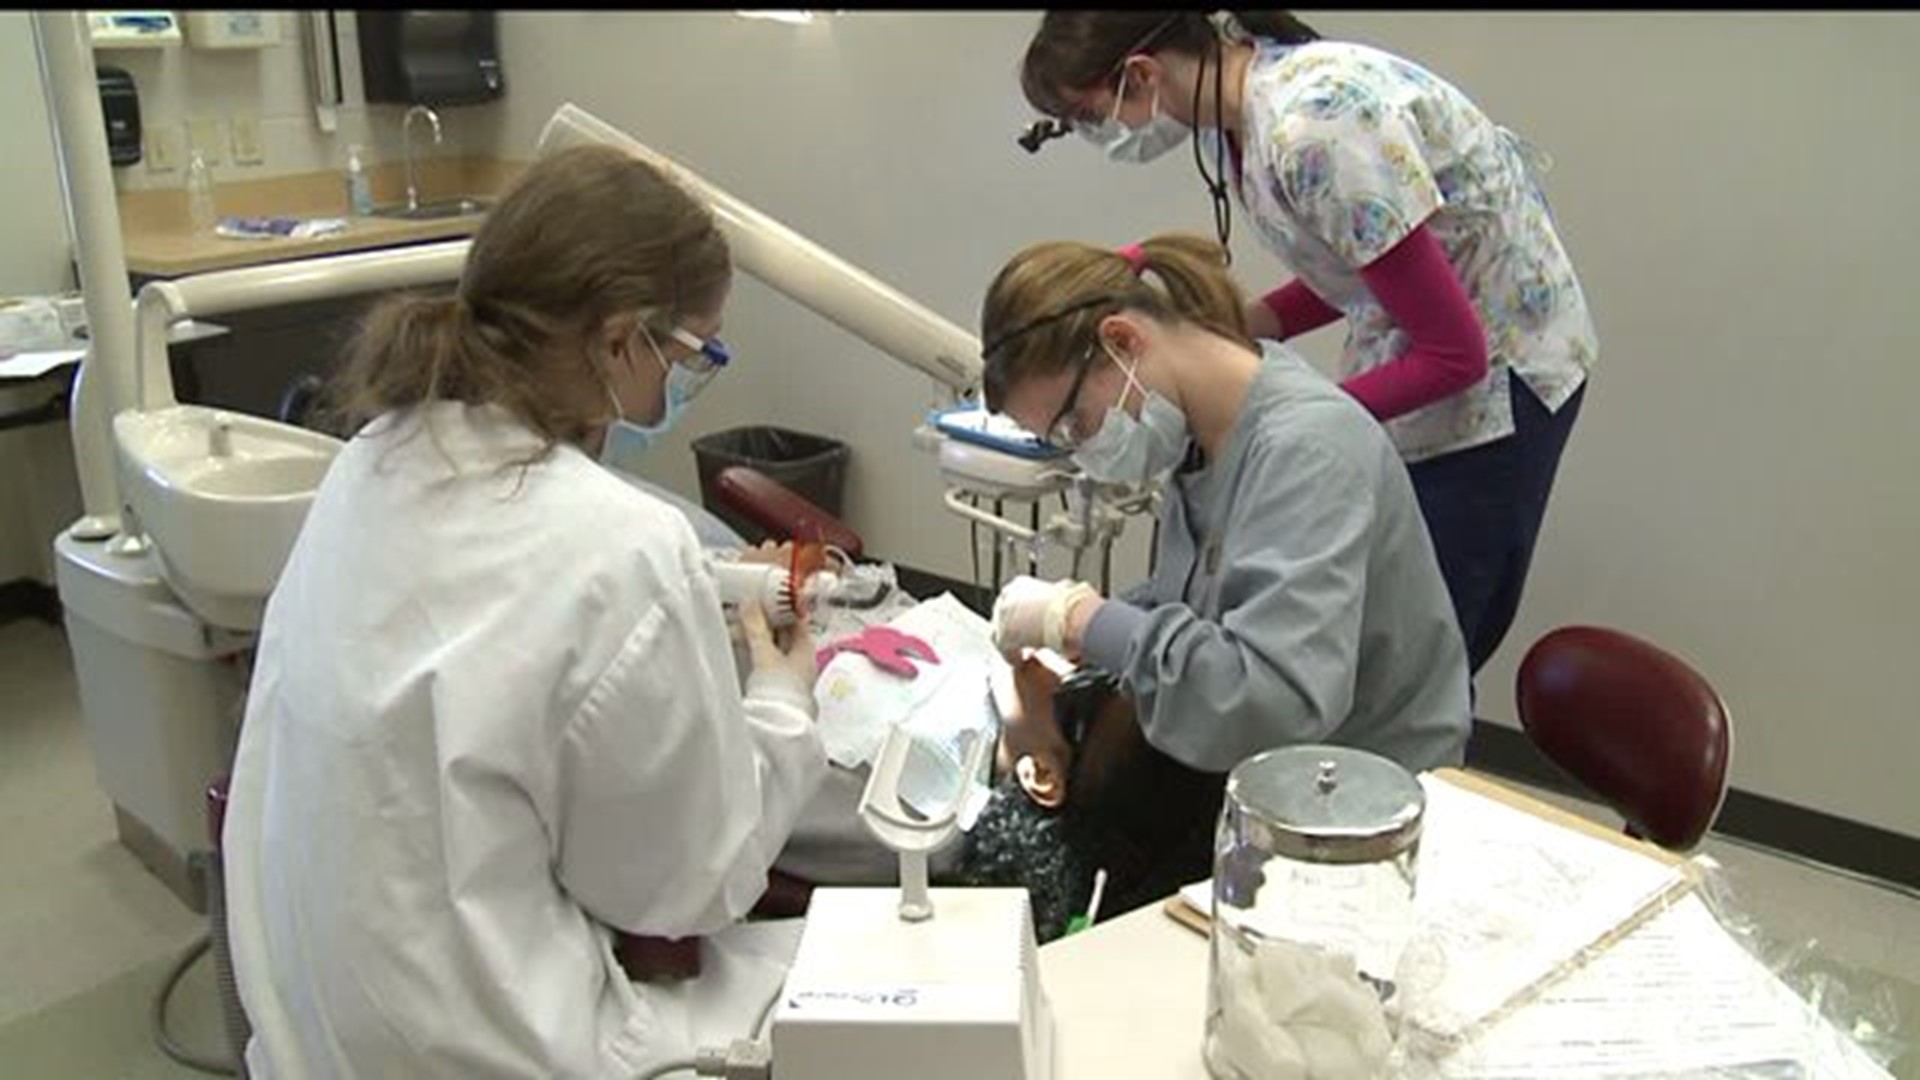 Sealant Saturday Gives Uninsured Kids Free Dental Care